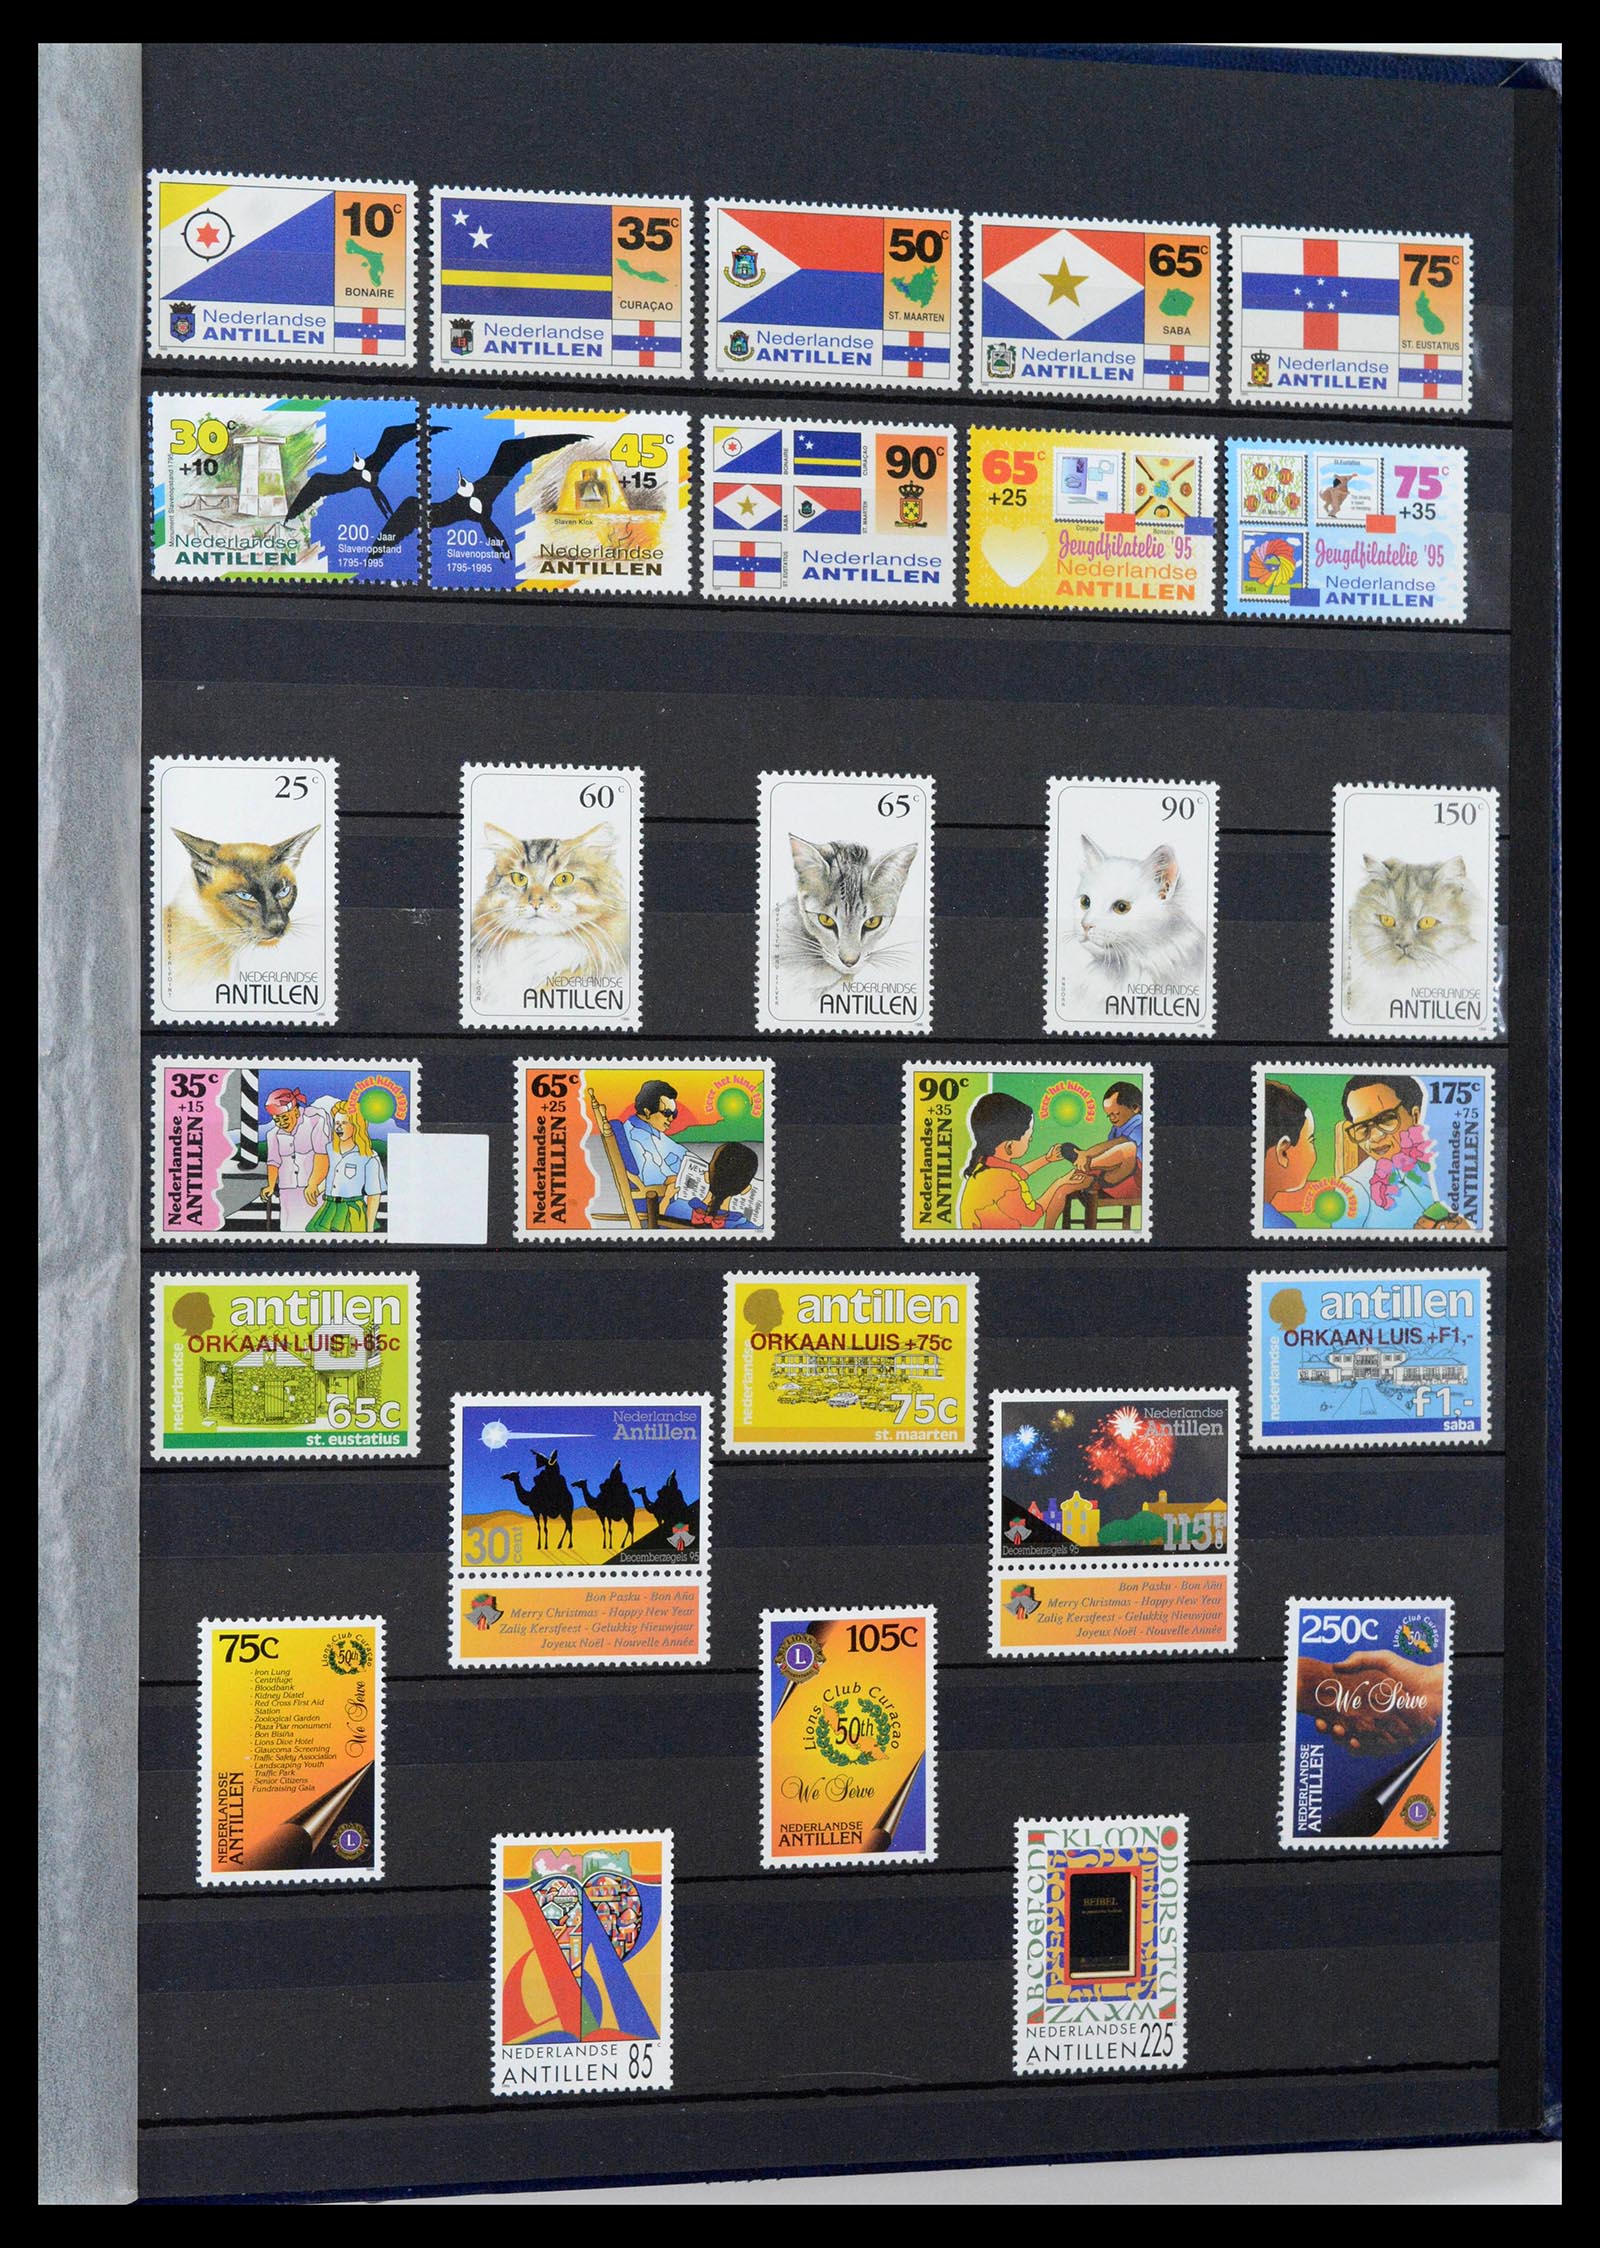 39027 0052 - Stamp collection 39027 Curaçao/Antilles/Aruba 1873-2009.